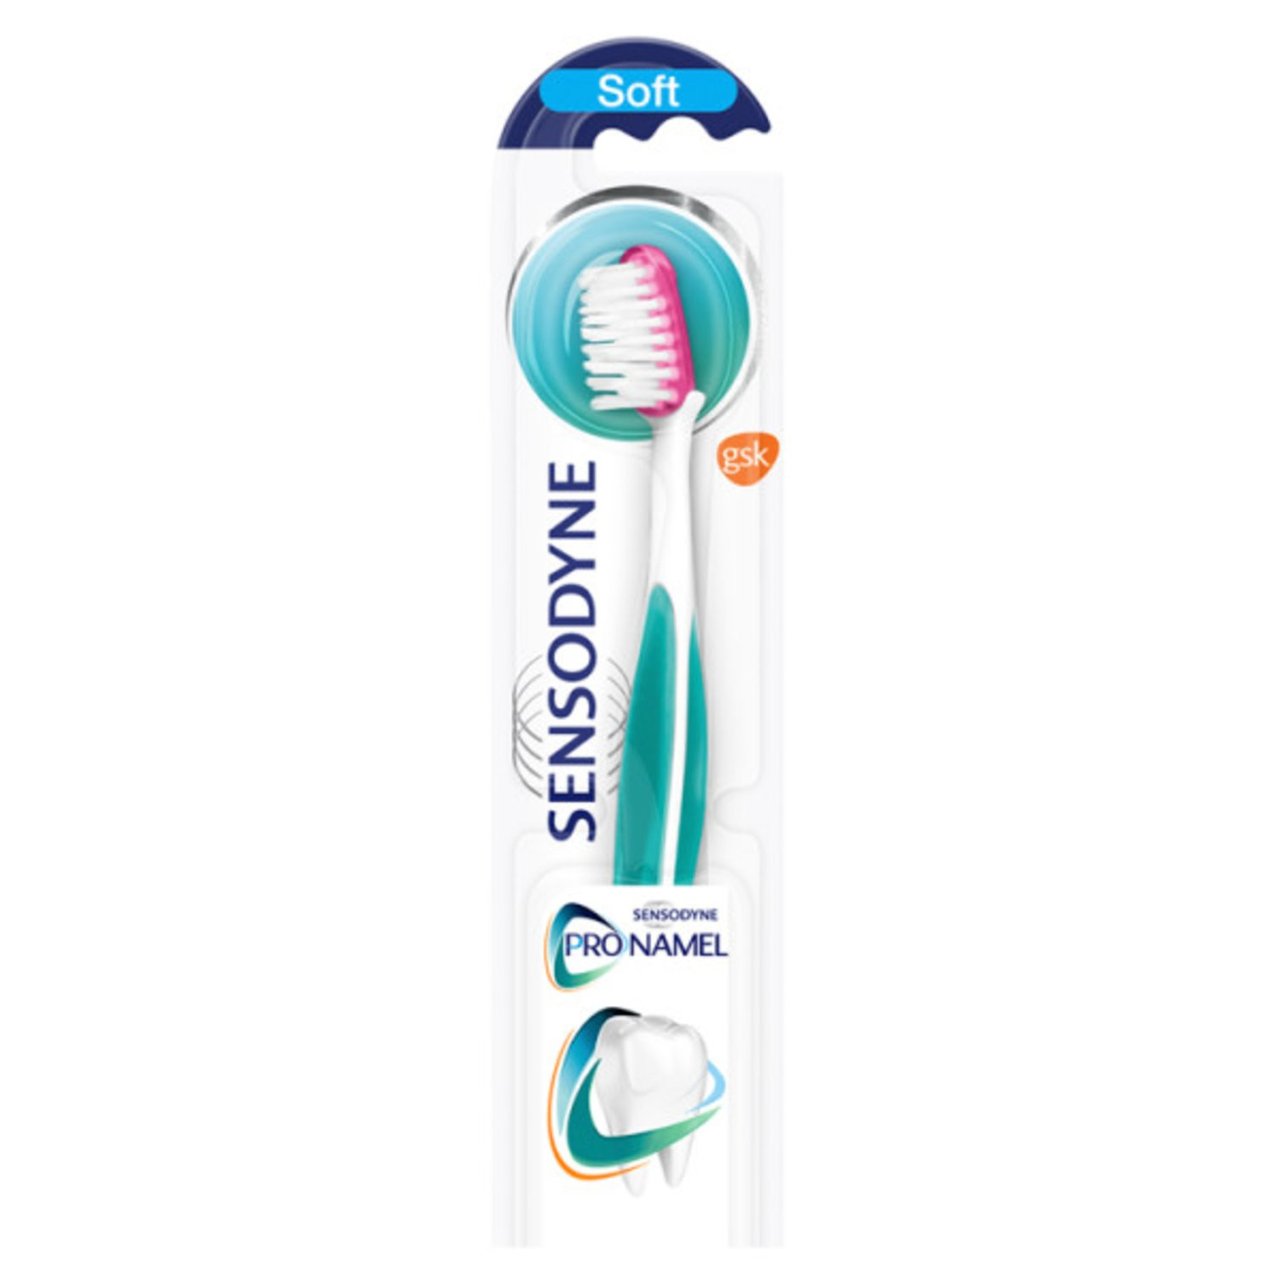 Sensodyne - Toothbrush - Pronamel - 1pc - Soft (100% Original)